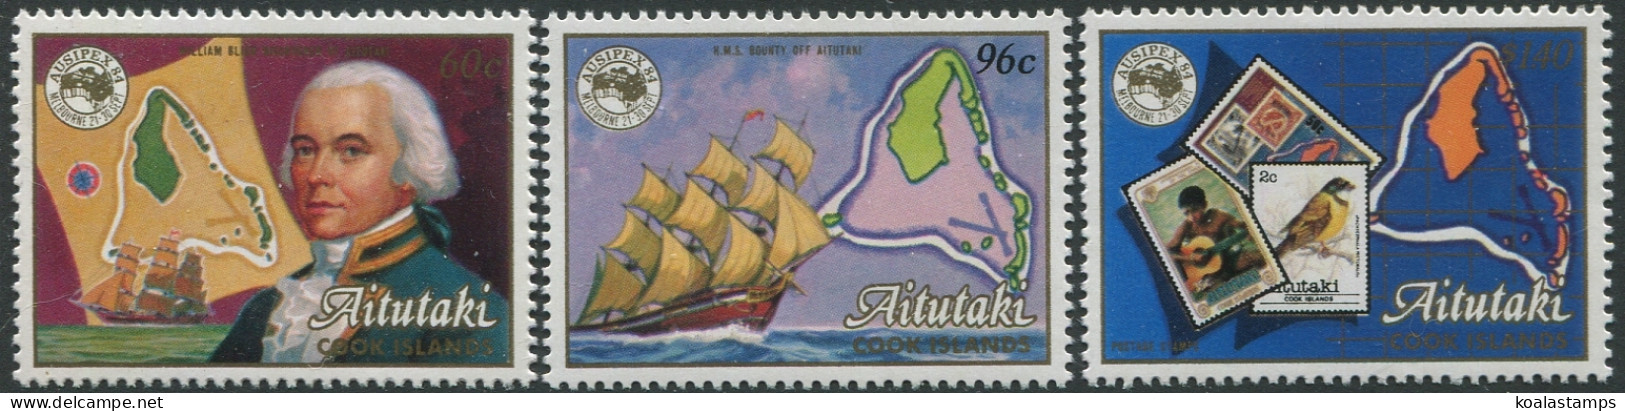 Aitutaki 1984 SG504-506 Ausipex Set MNH - Cook Islands